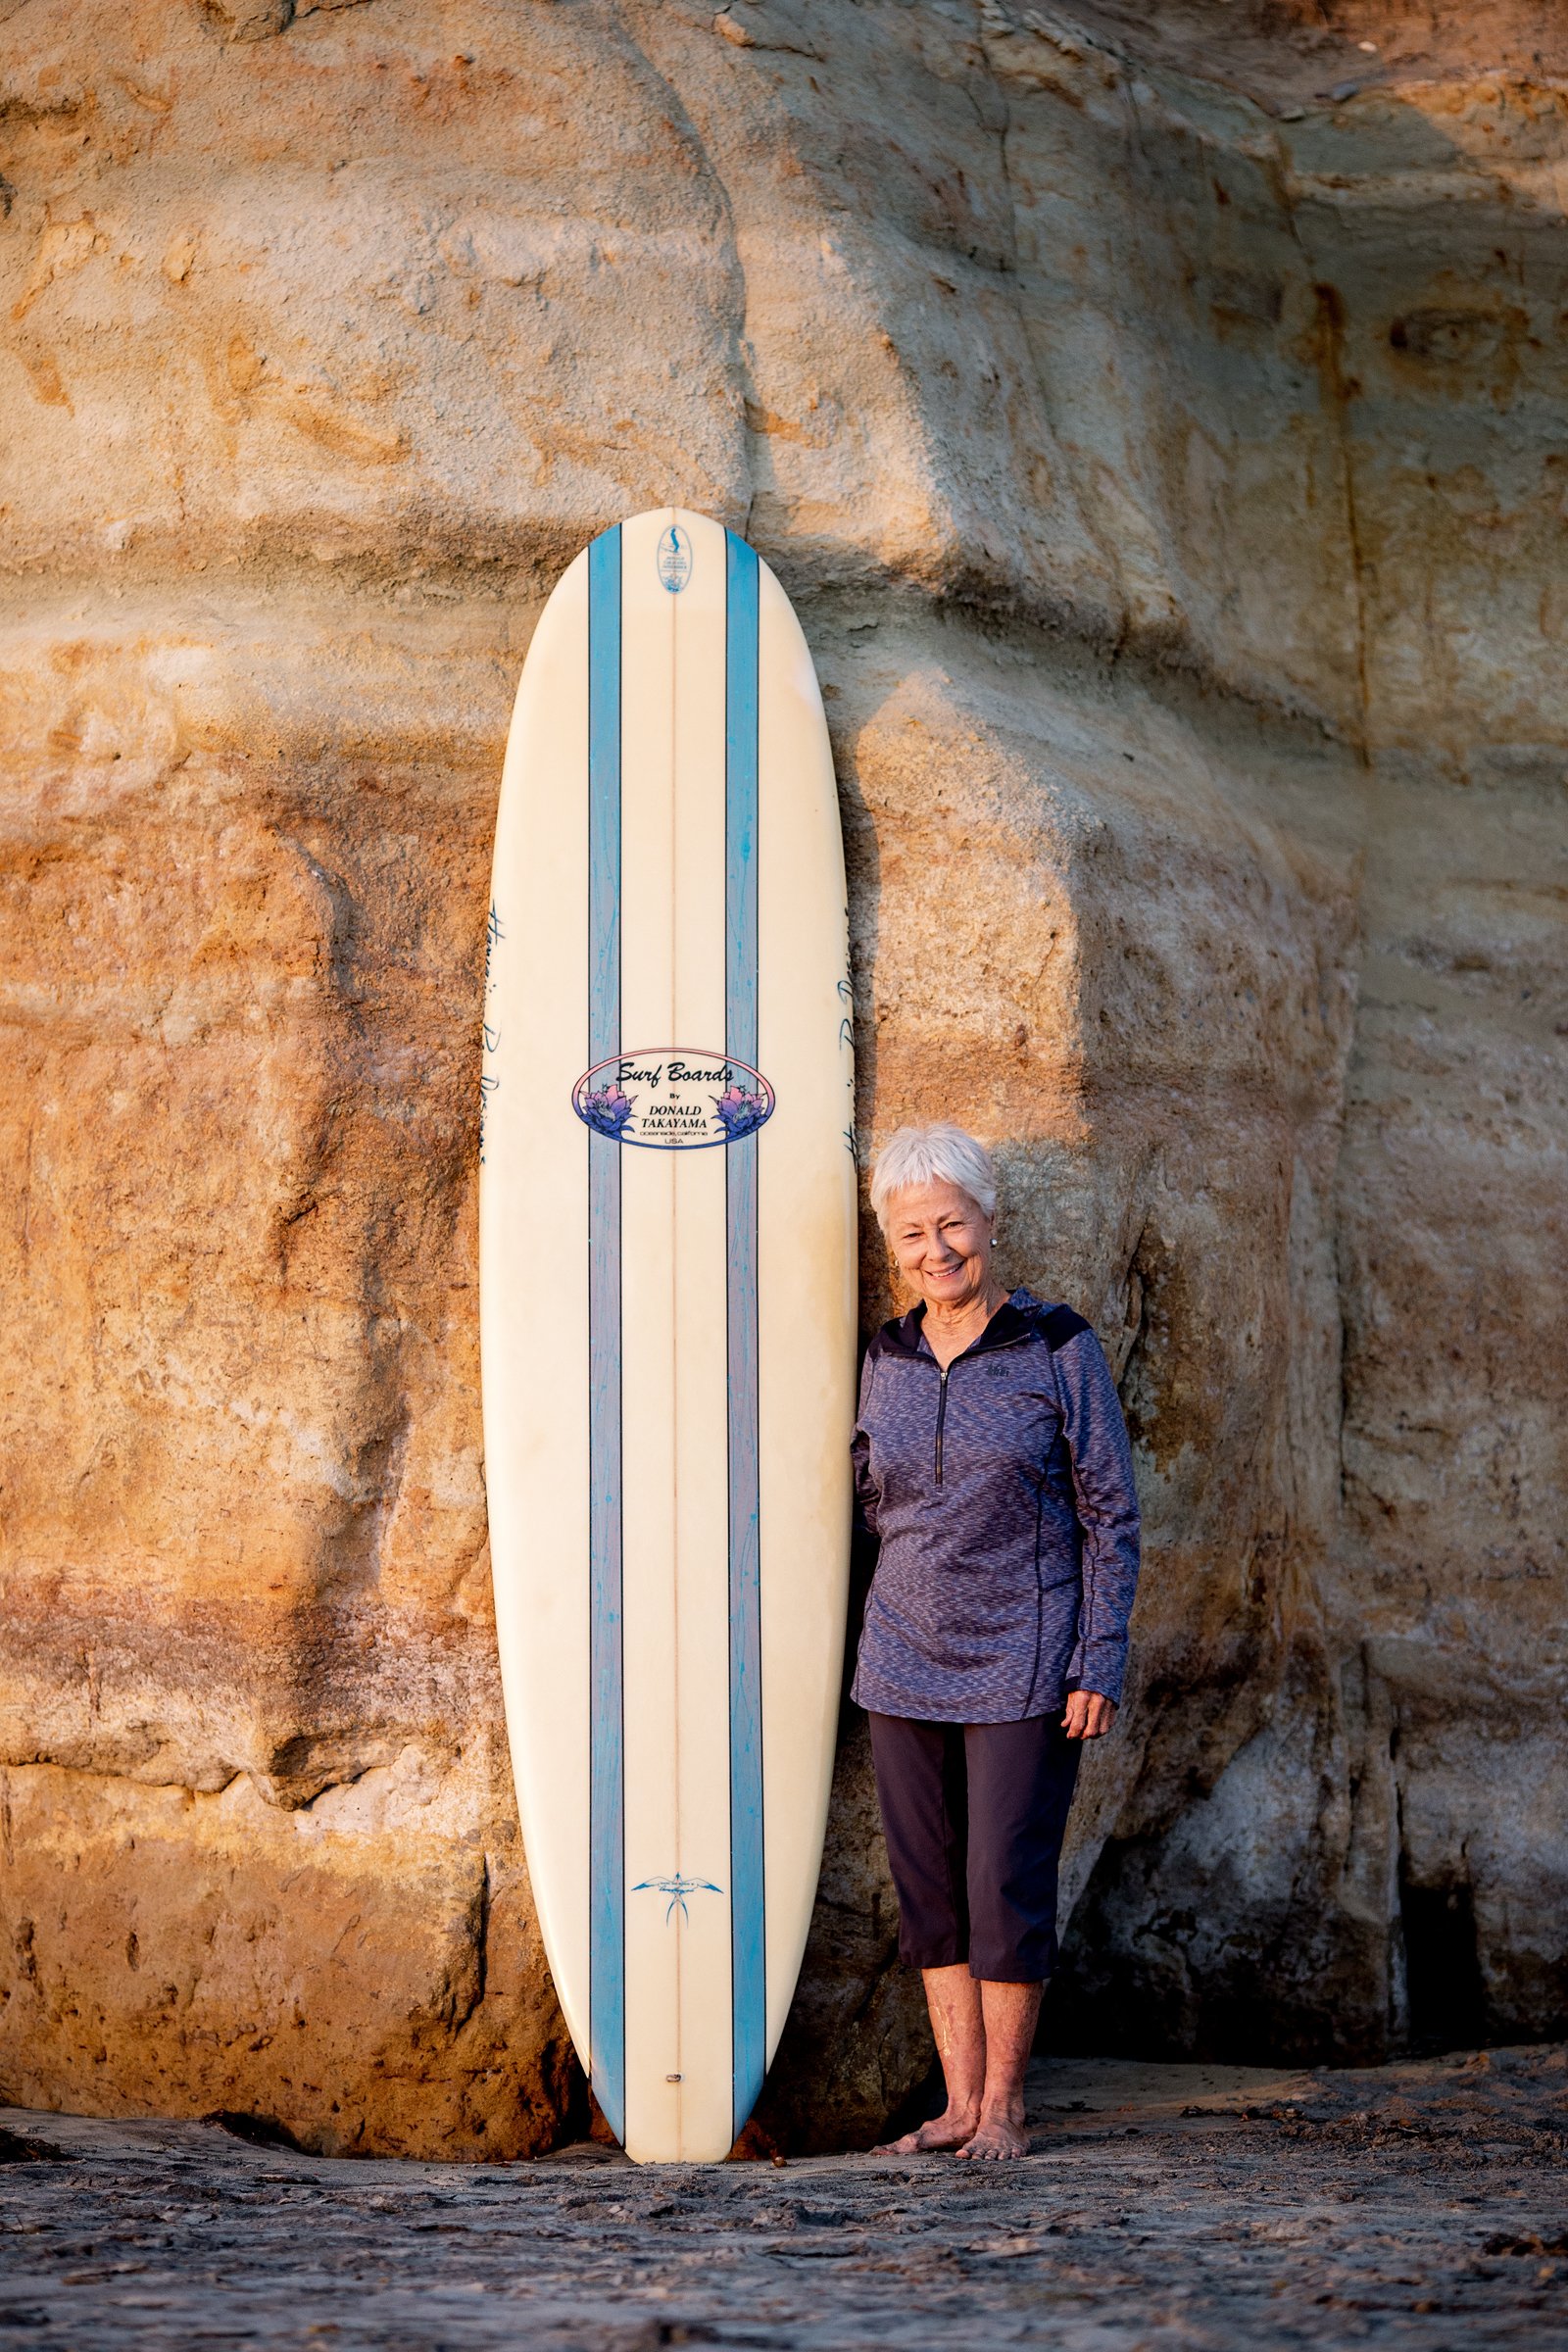  Linda Benson with her prized Donald Takayama surfboard. © ChrisGrantPhoto 